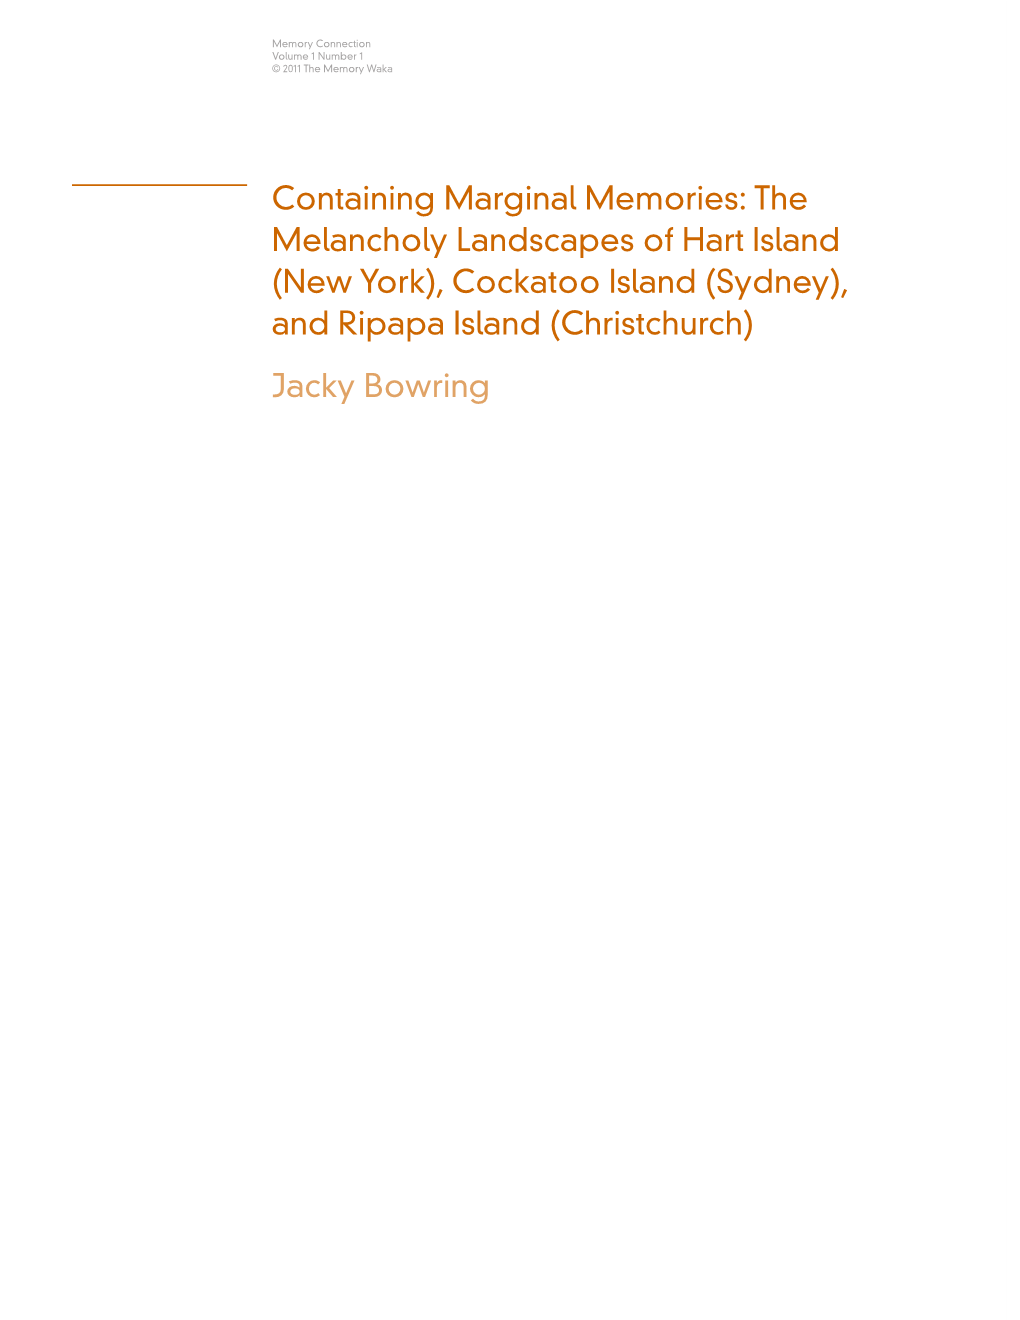 Containing Marginal Memories: the Melancholy Landscapes of Hart Island (New York), Cockatoo Island (Sydney), and Ripapa Island (